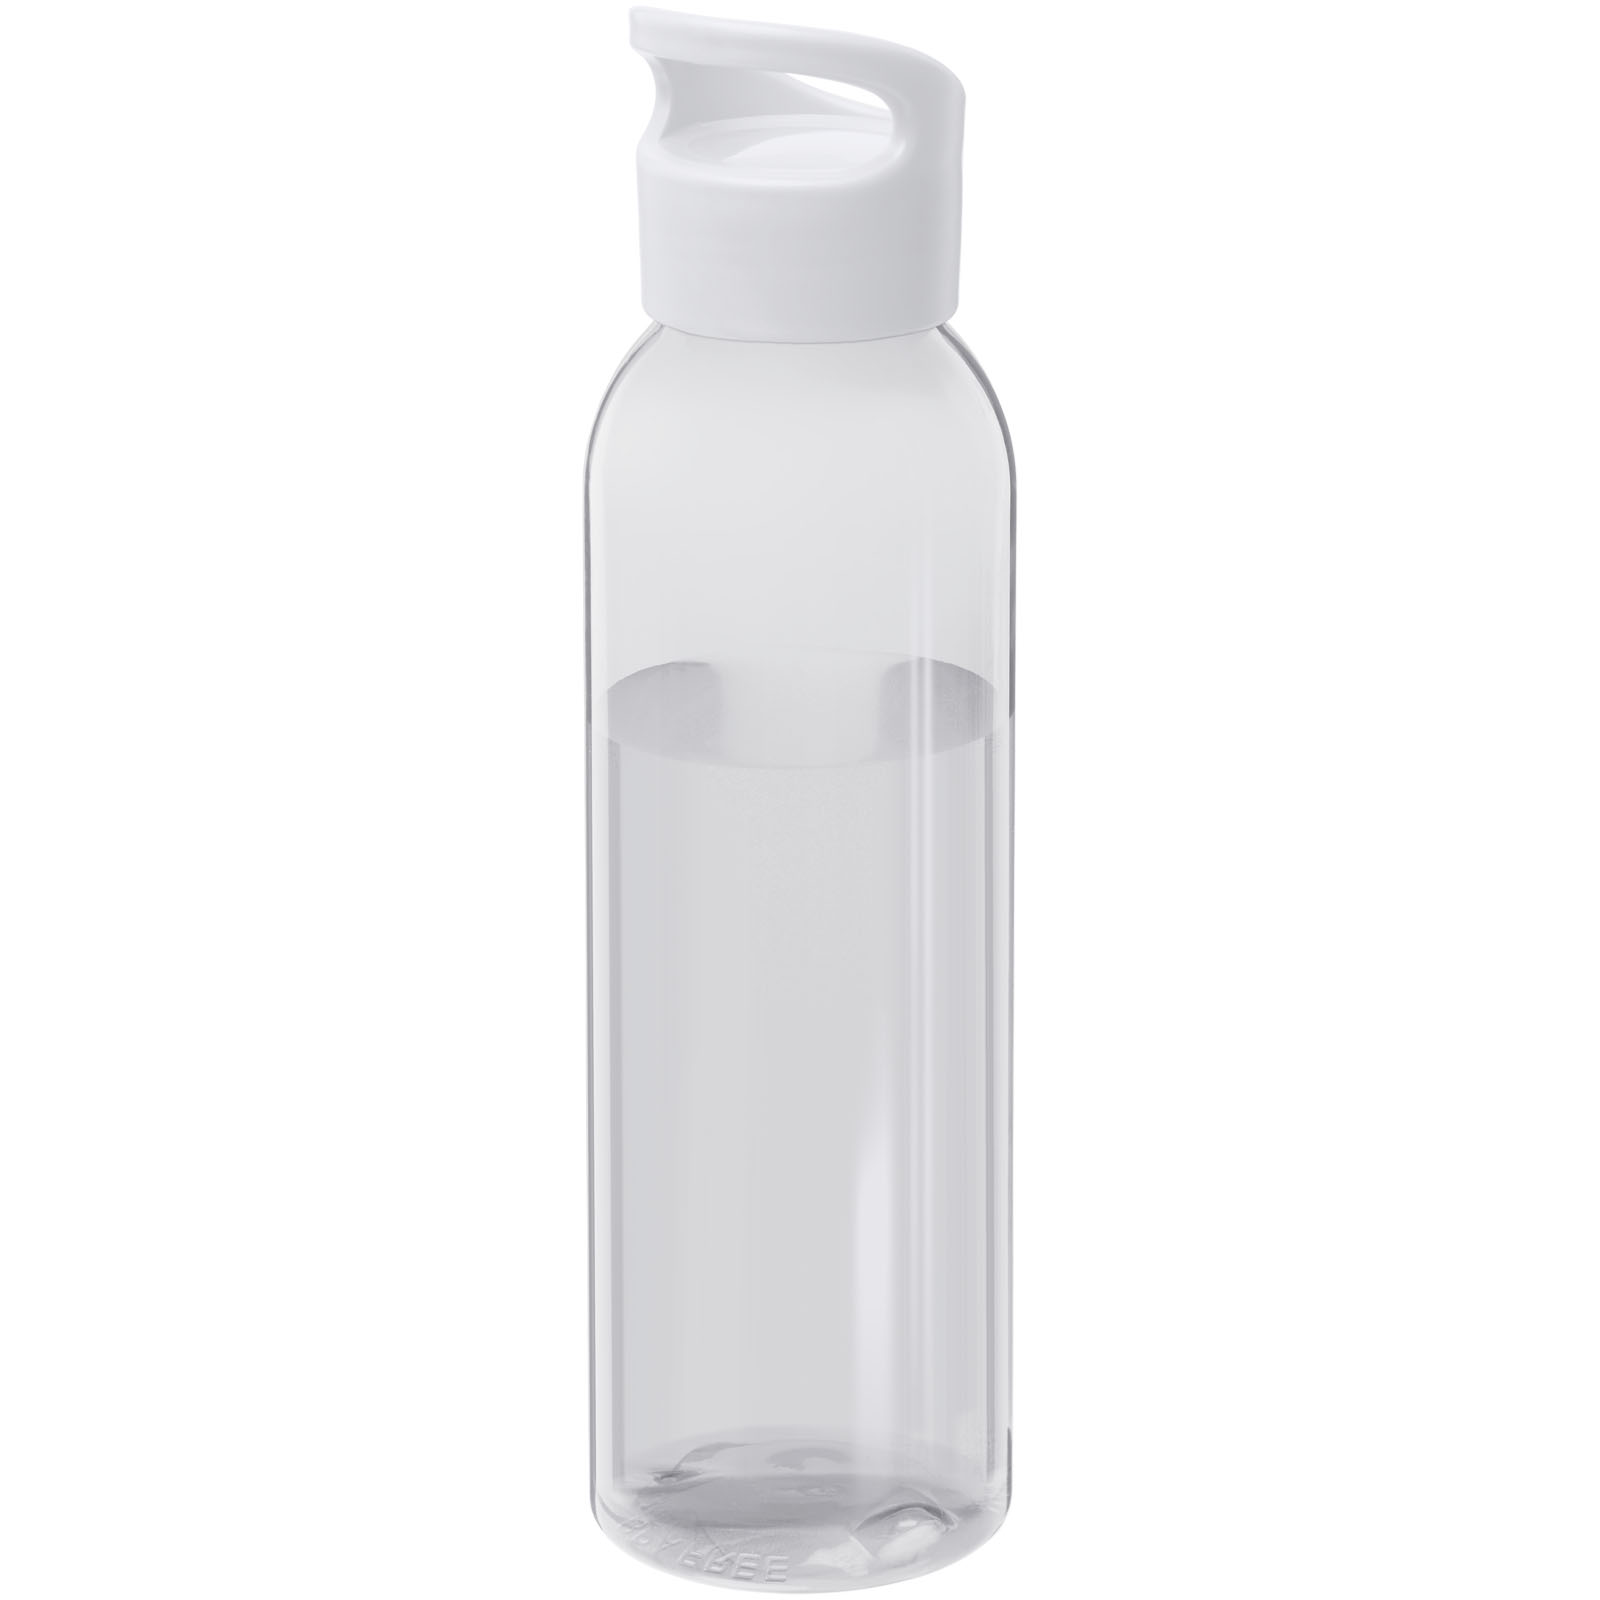 Advertising Water bottles - Sky 650 ml recycled plastic water bottle